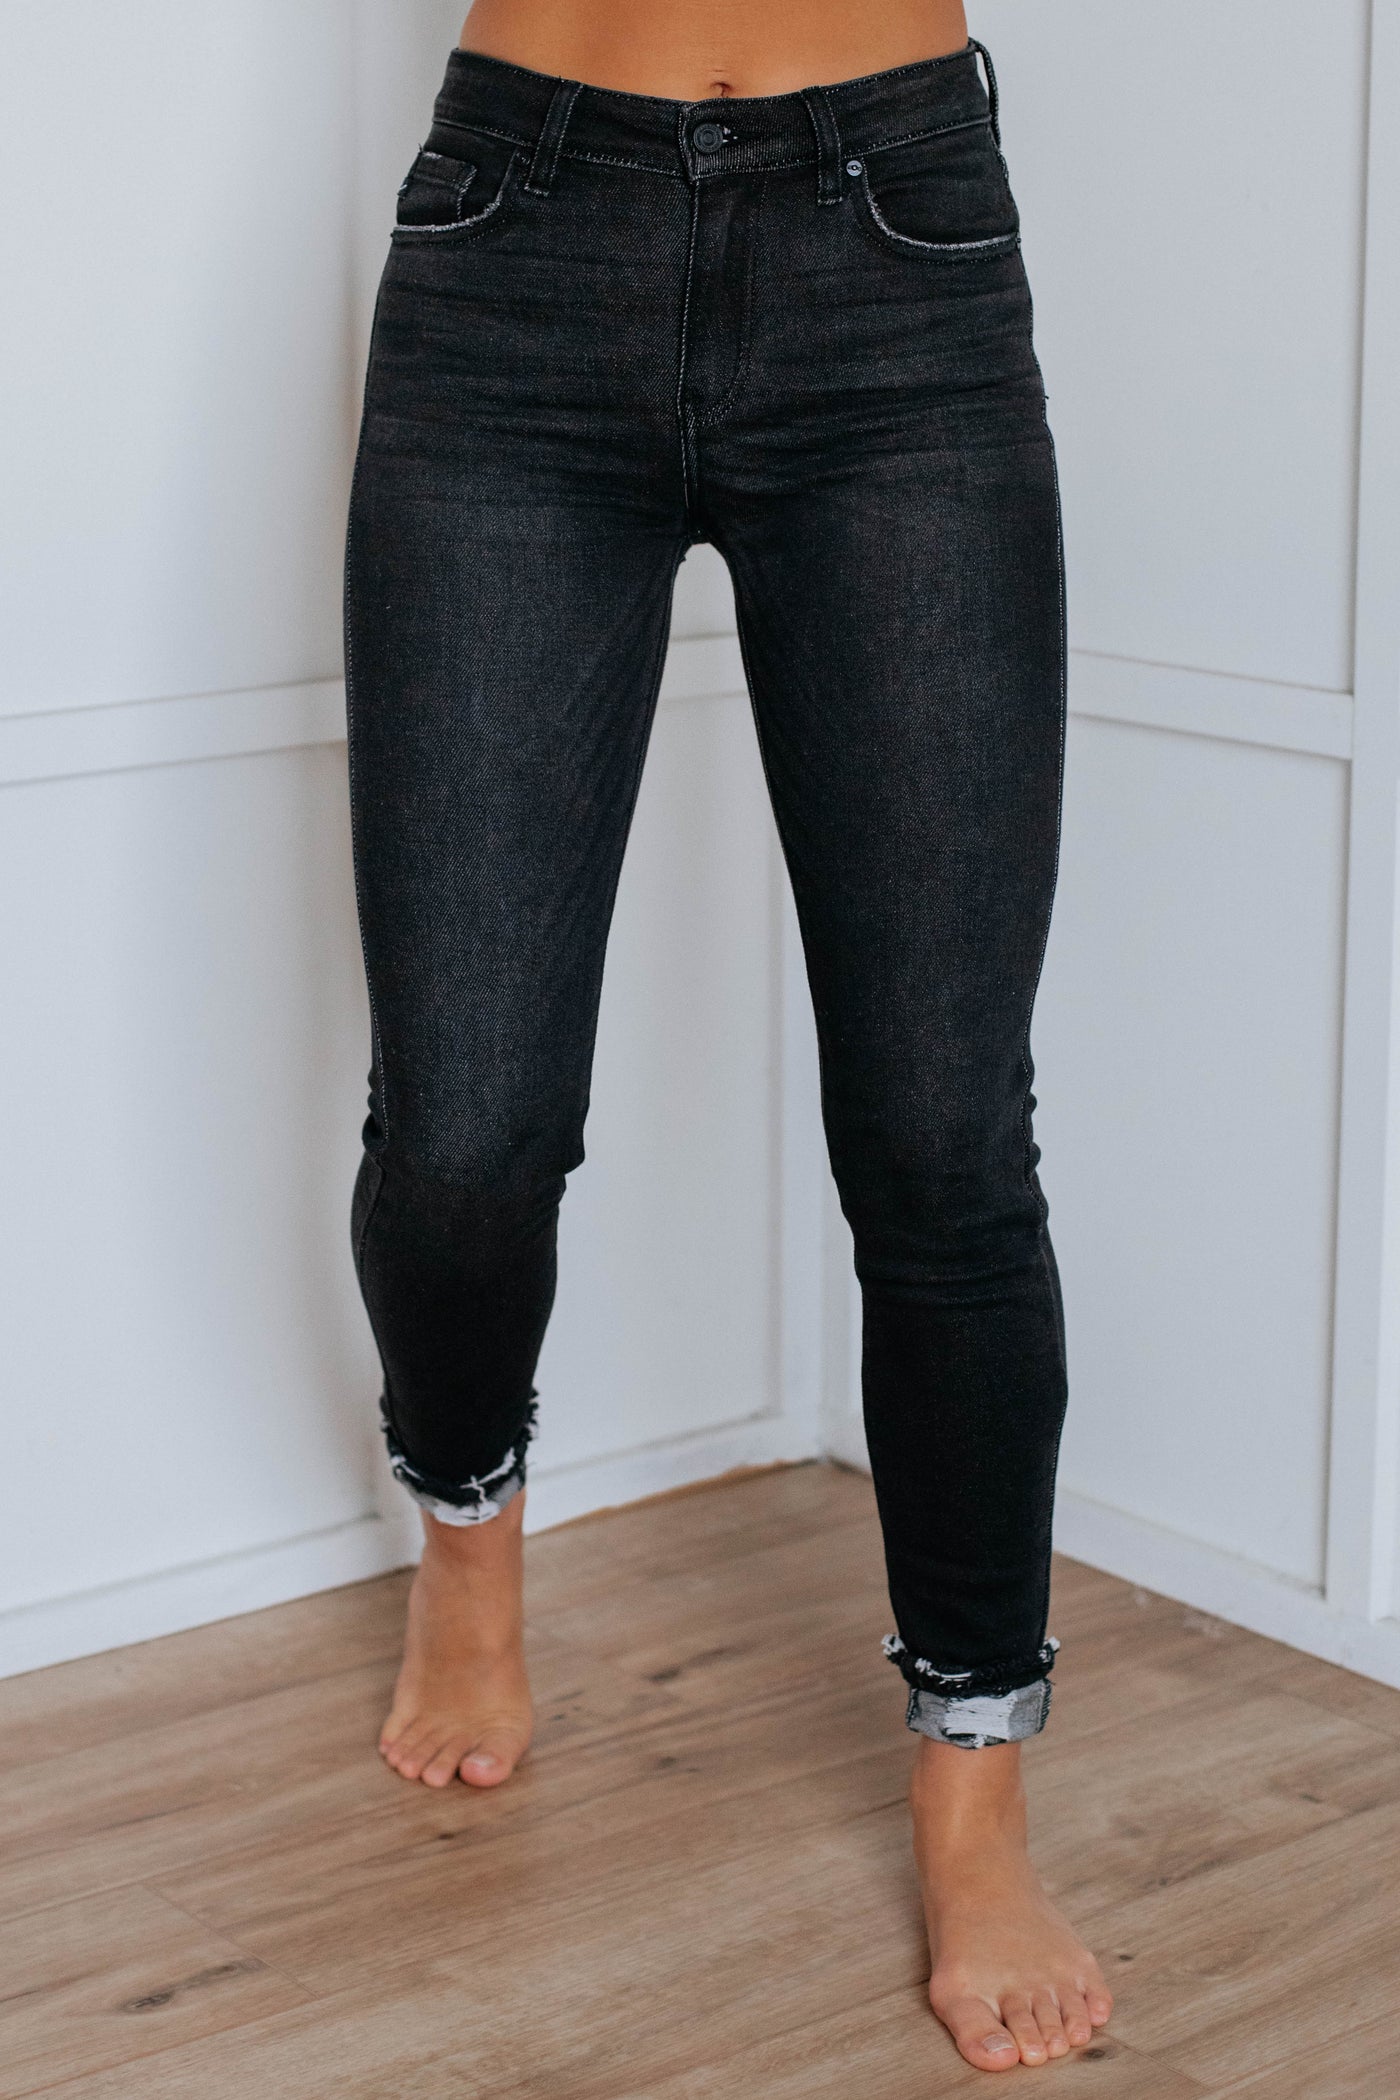 Ariana KanCan Jeans